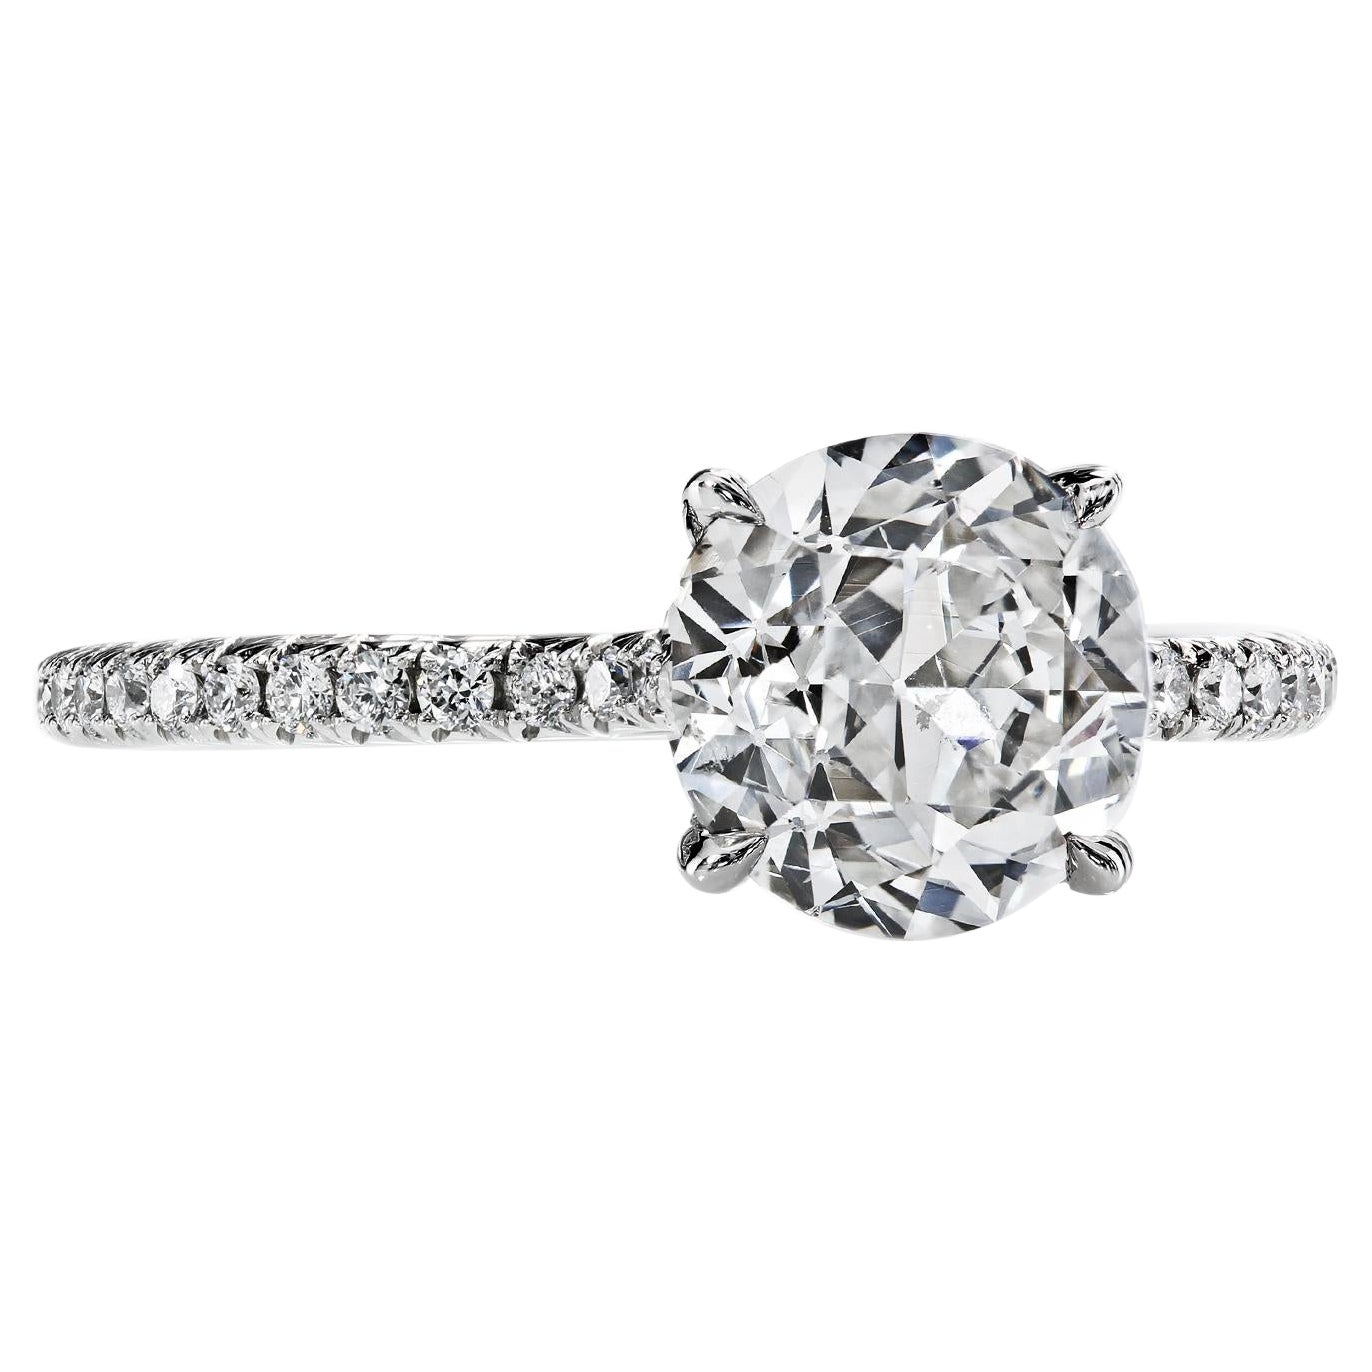 Leon Mege Platinum Engagement Ring with 1.66 Ct Old European Cut Diamond